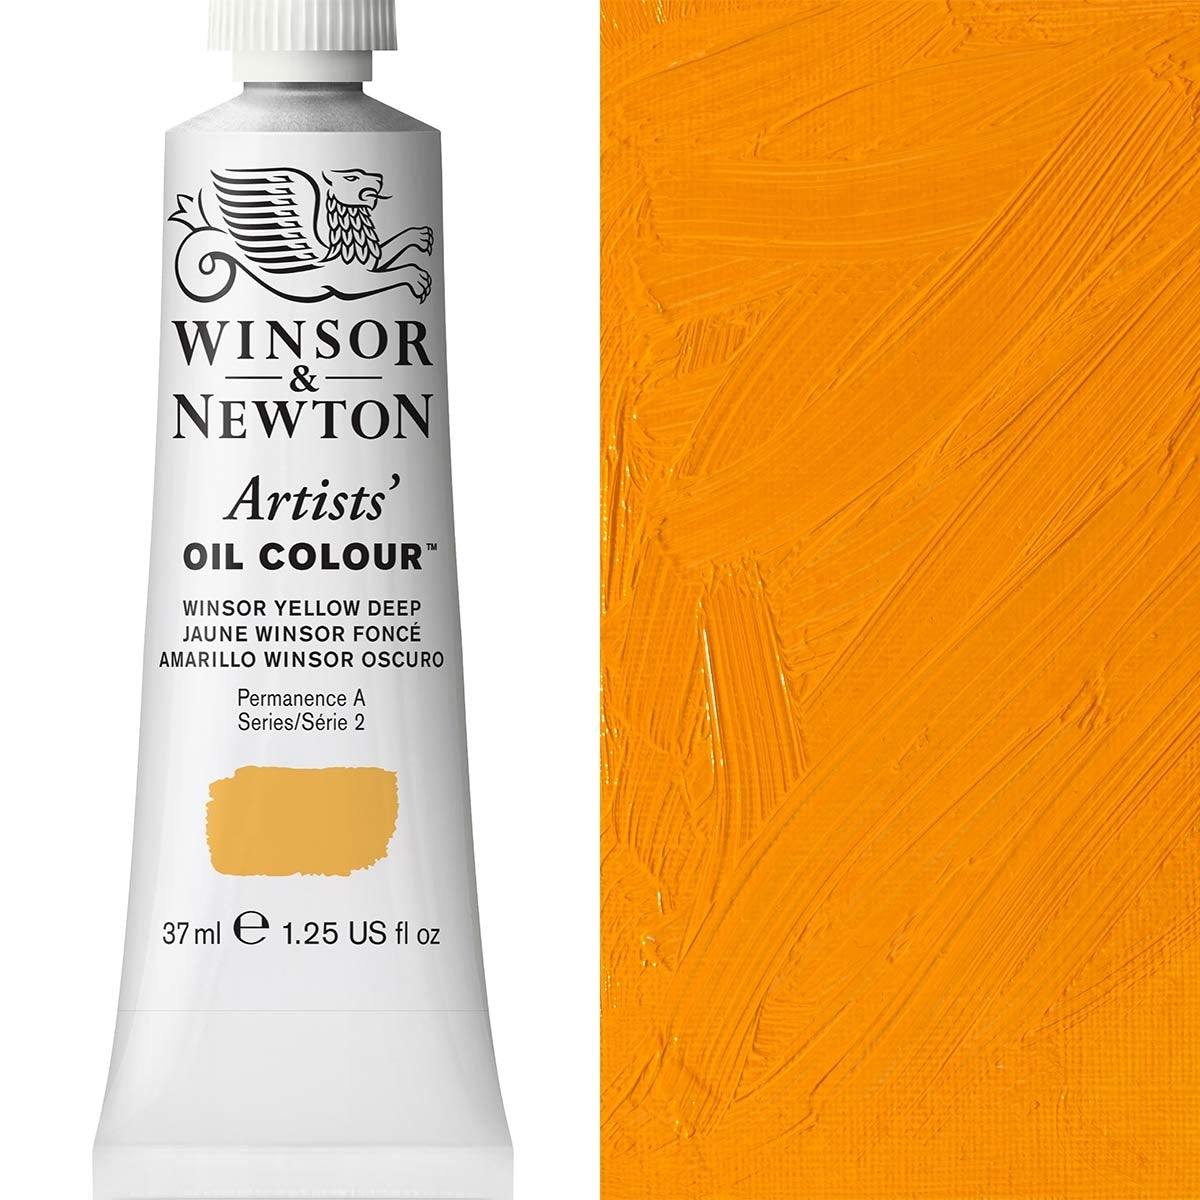 Winsor and Newton - Artists' Oil Colour - 37ml - Winsor Yellow Deep